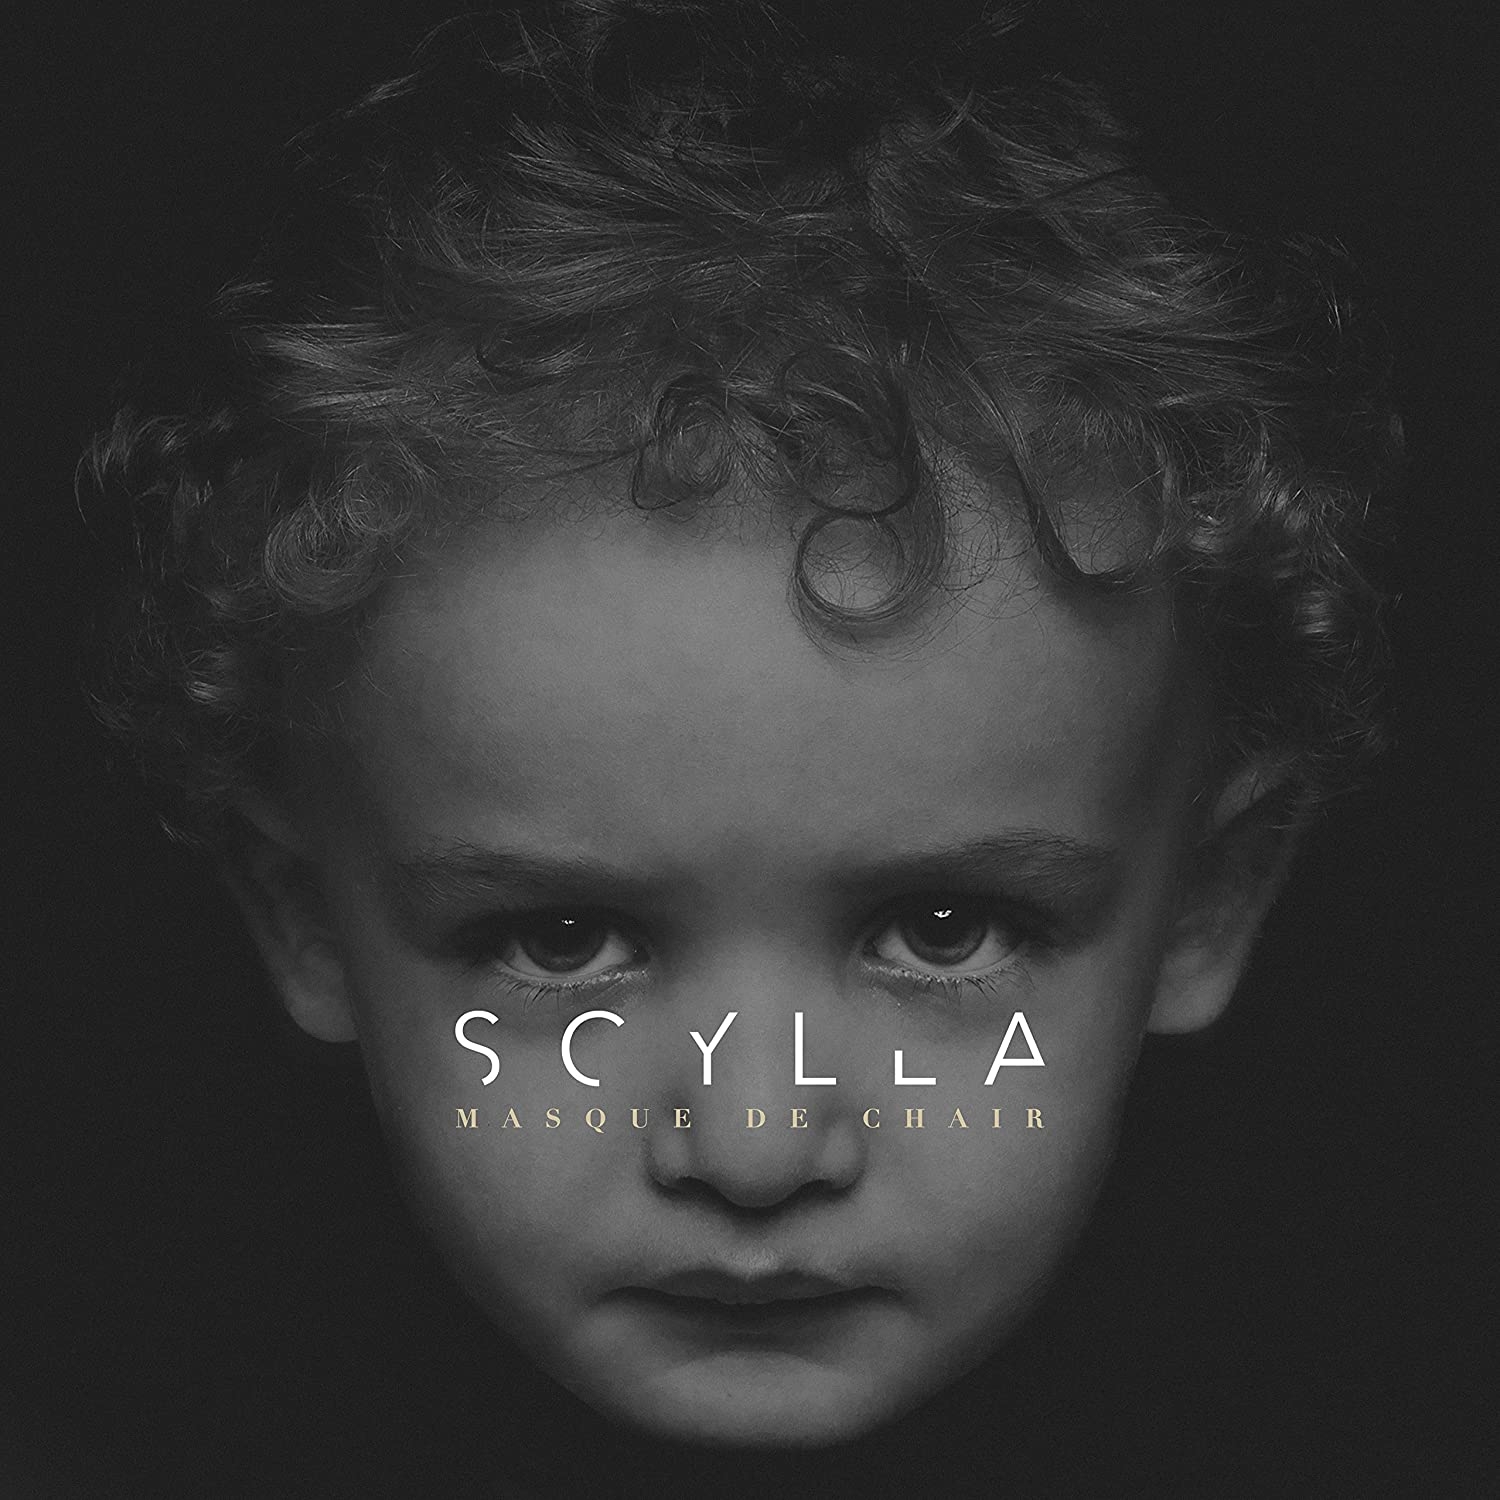 Album Cd Scylla - Masque de Chair de sur Scredboutique.com